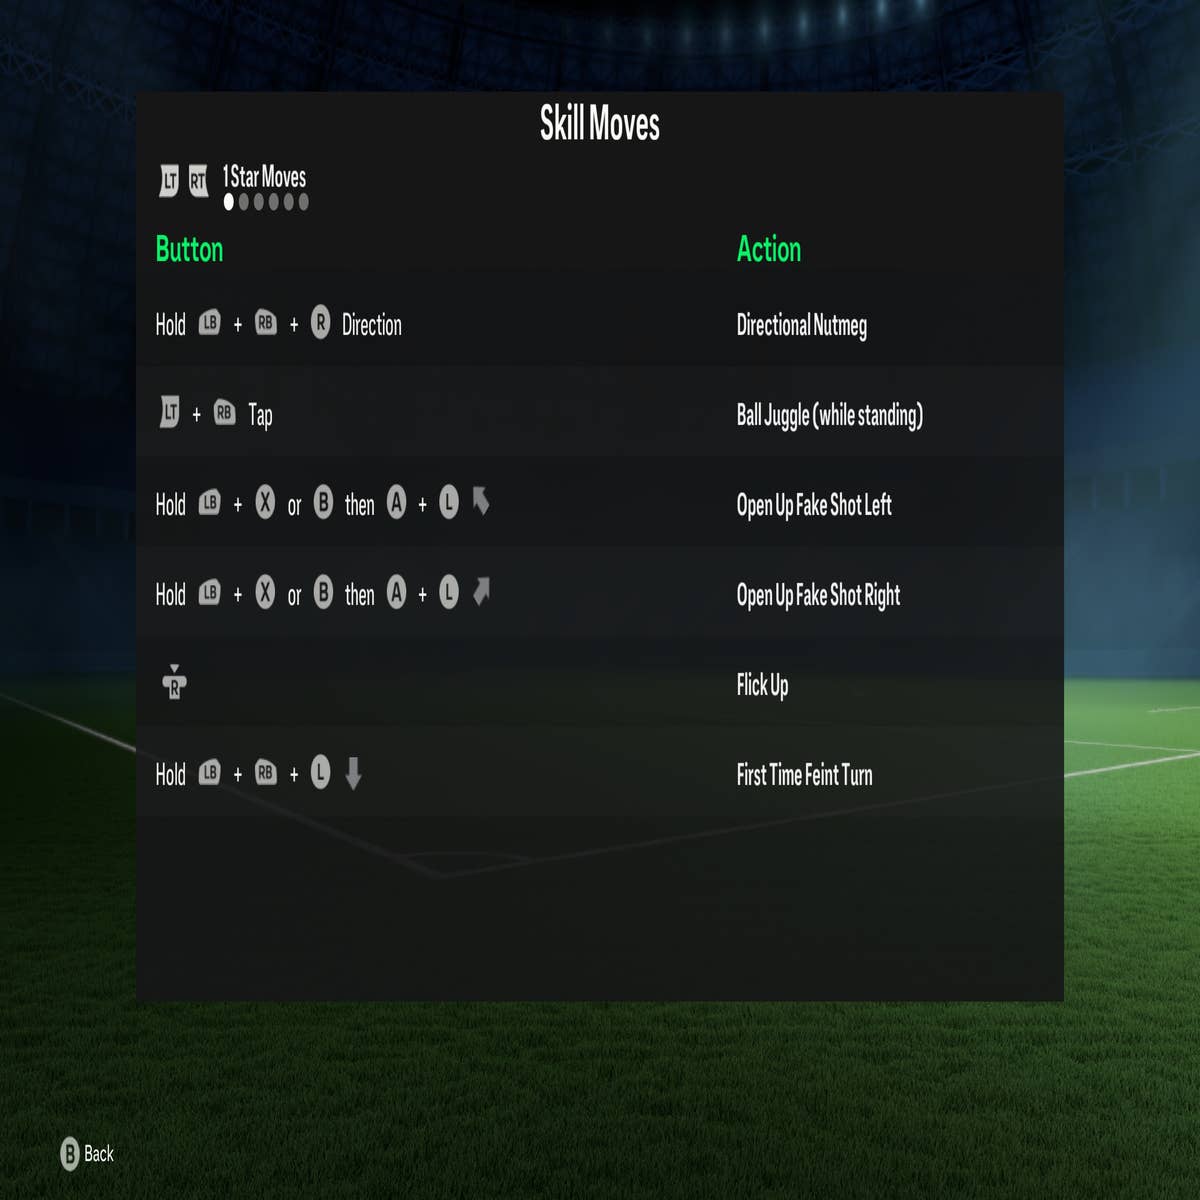 EA Sports FC 24 skill moves: Every skill move in FC 24